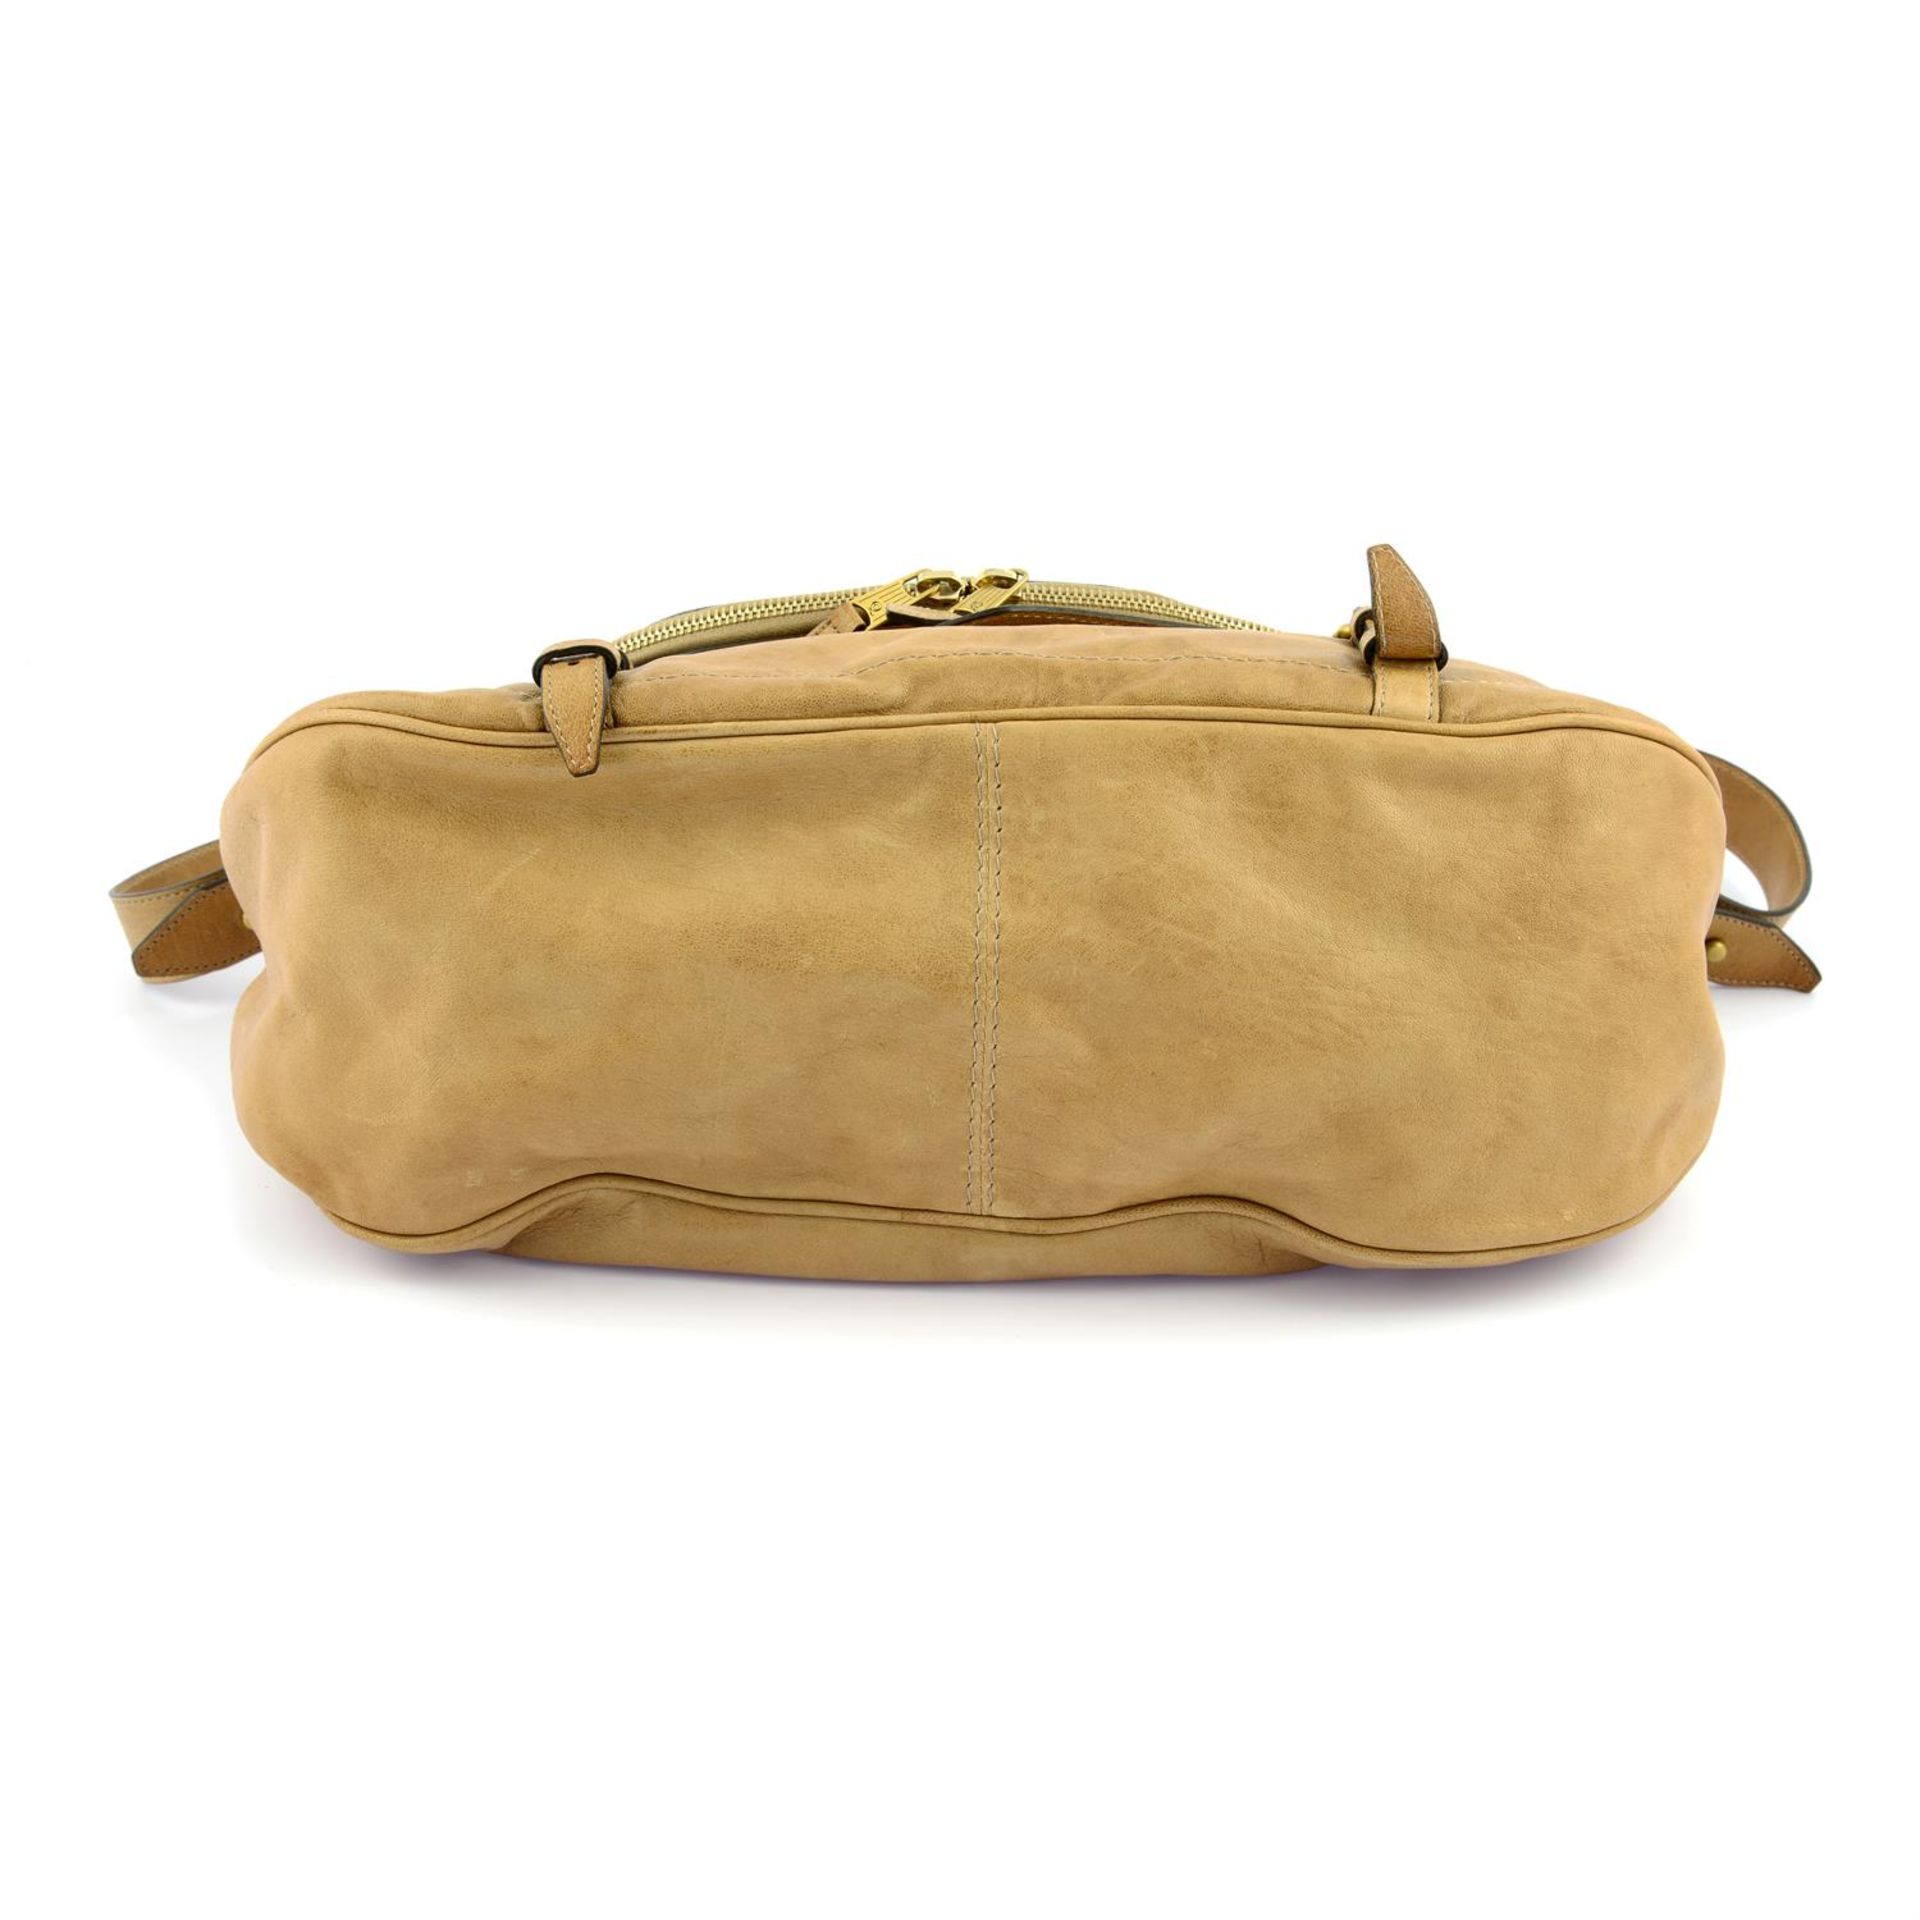 ALEXANDER MCQUEEN - a tan leather Faithfull handbag. - Image 4 of 5